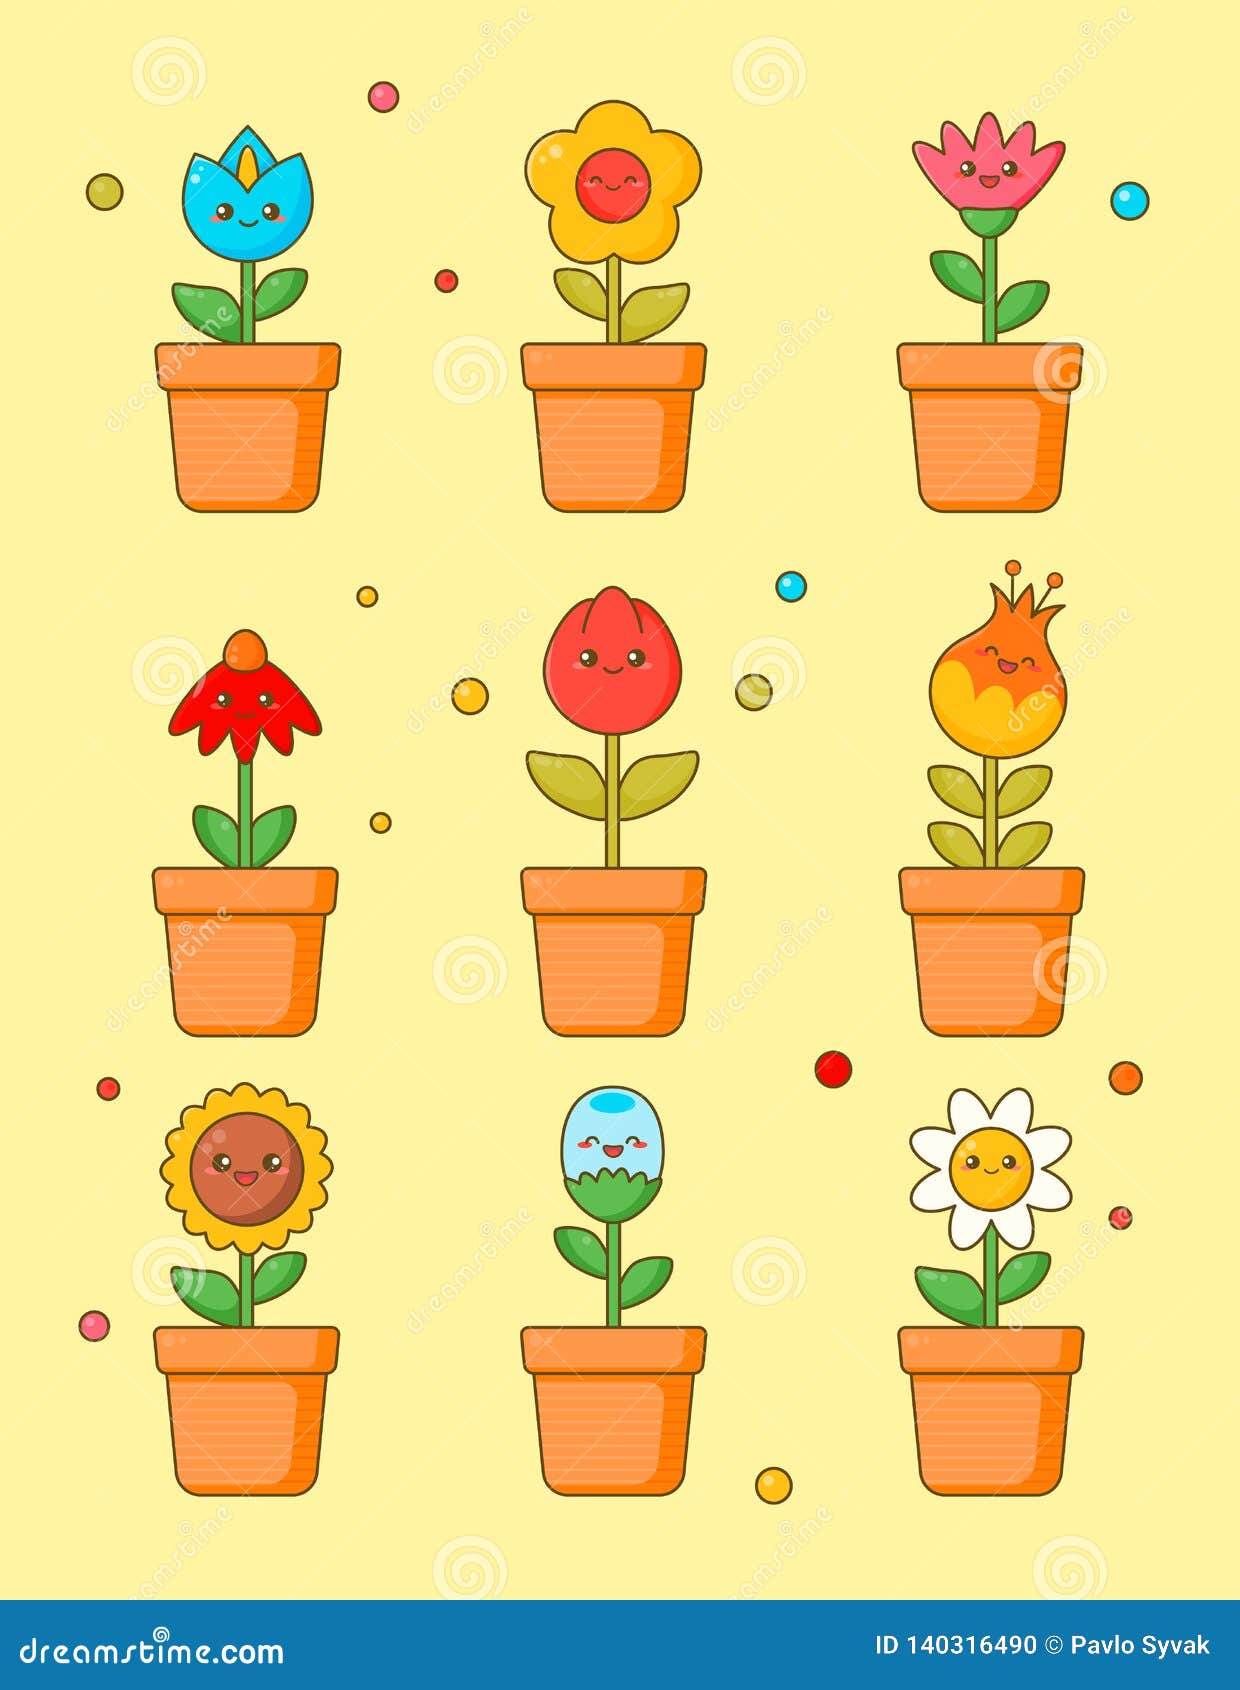 Cute Plant Stickers, Unique Designs